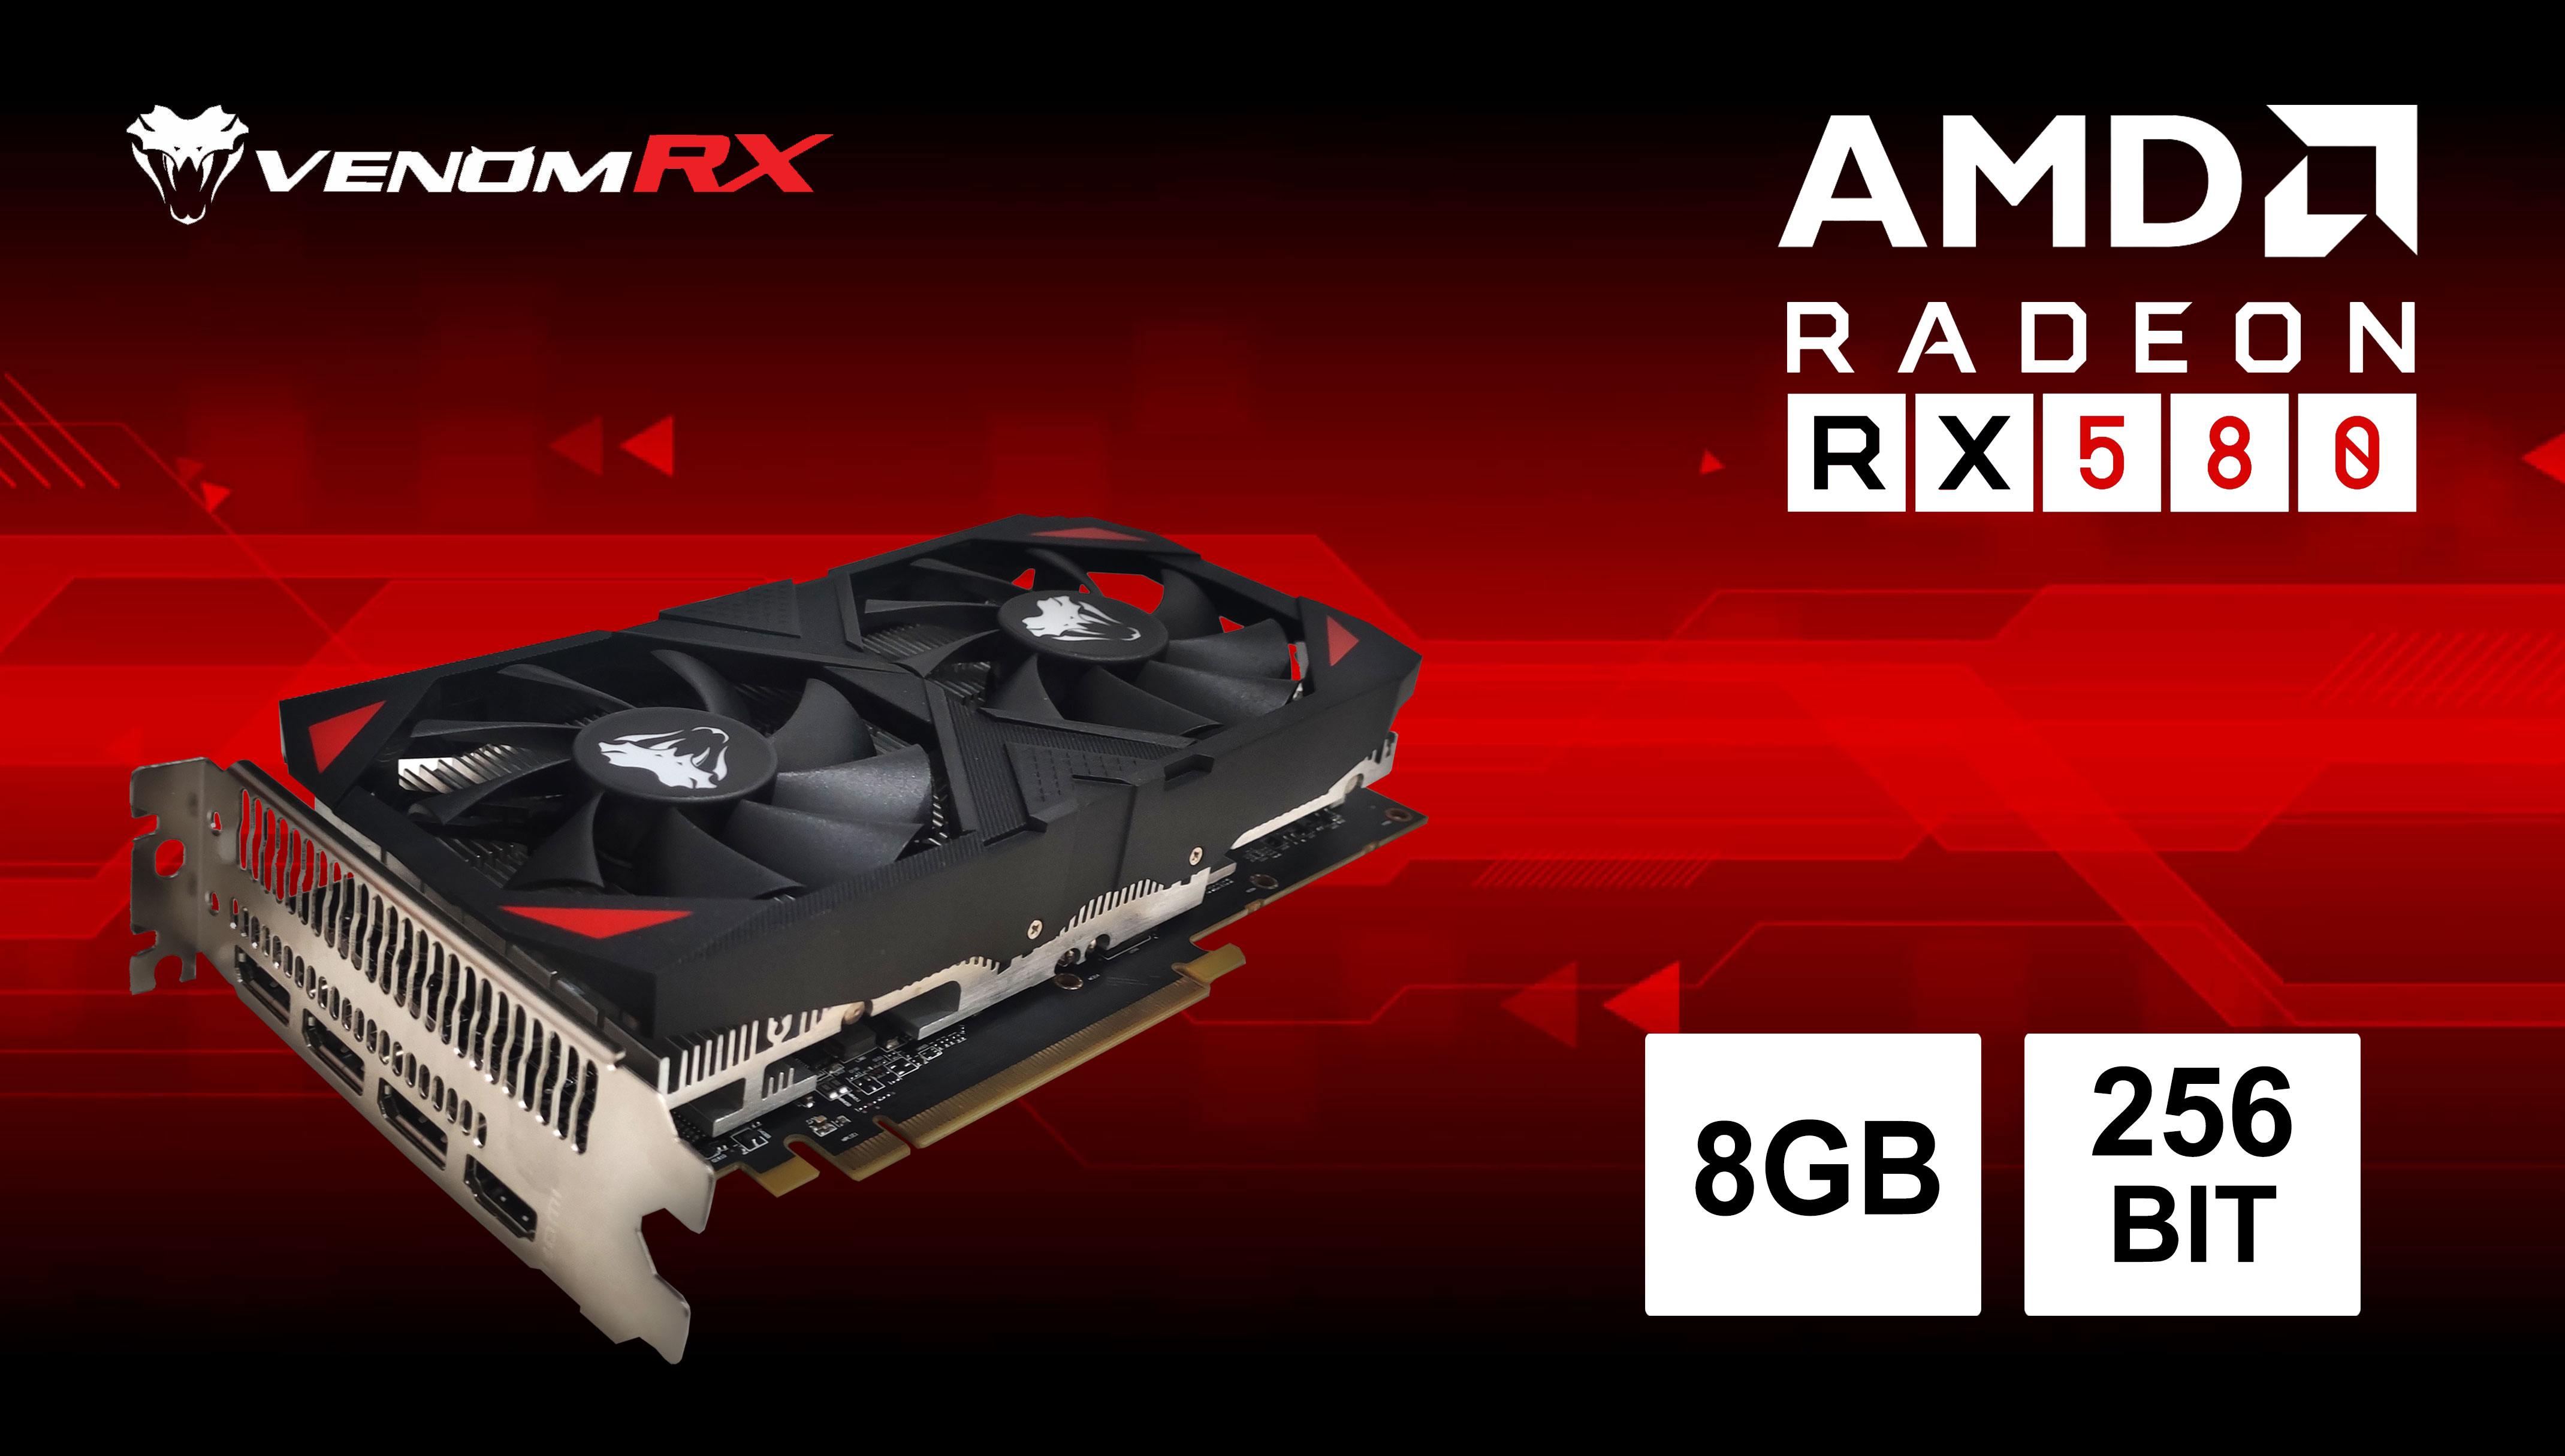 RX 580 8GB – VenomRX